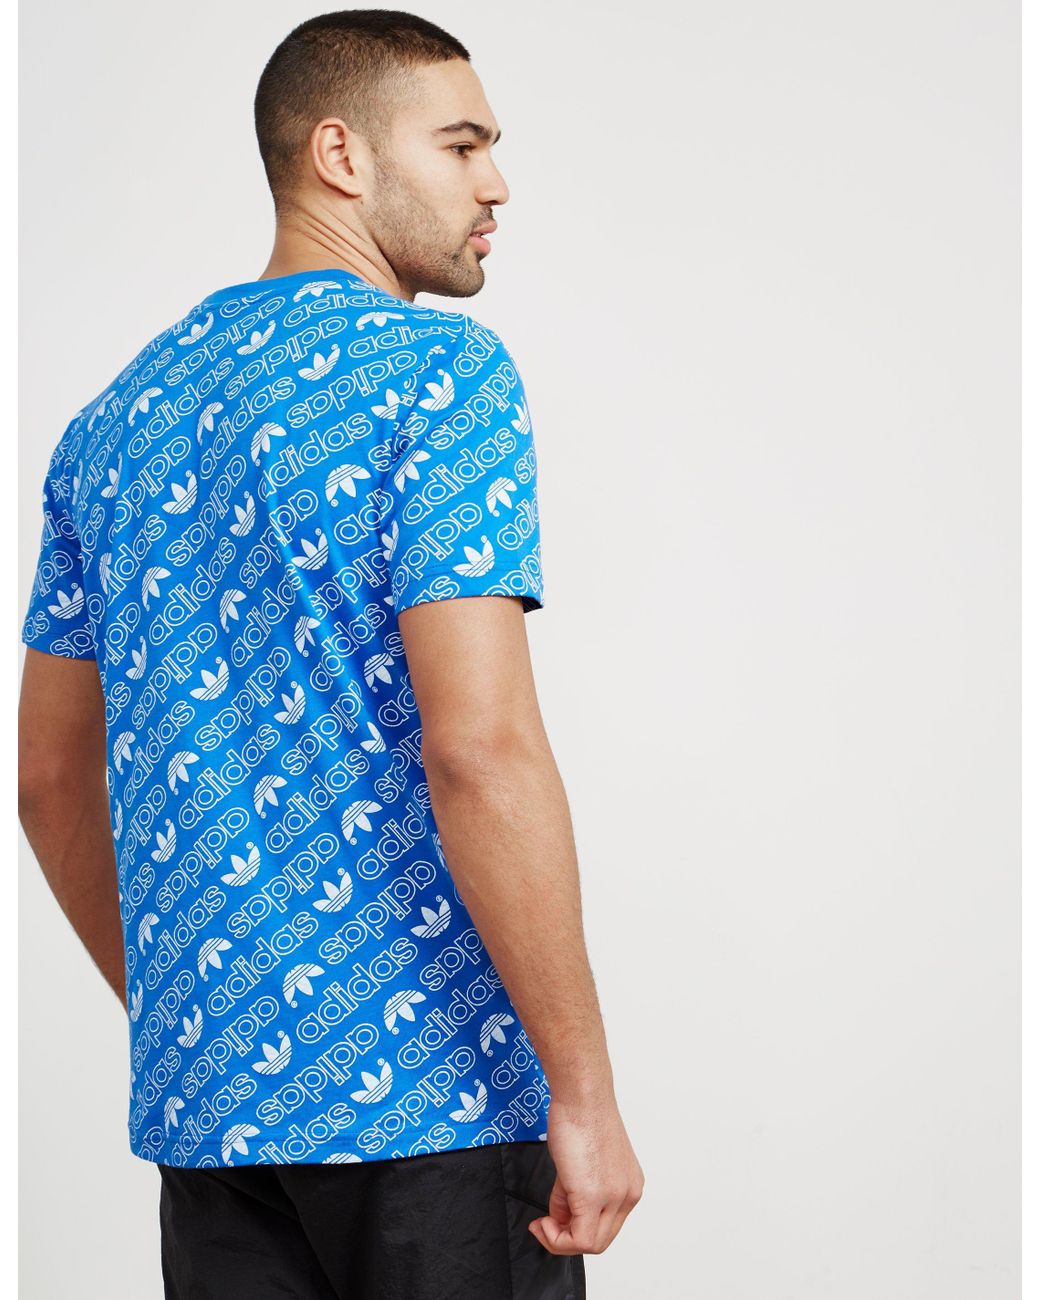 adidas Originals Mens All Over Print T-shirt Blue/white for Men | Lyst